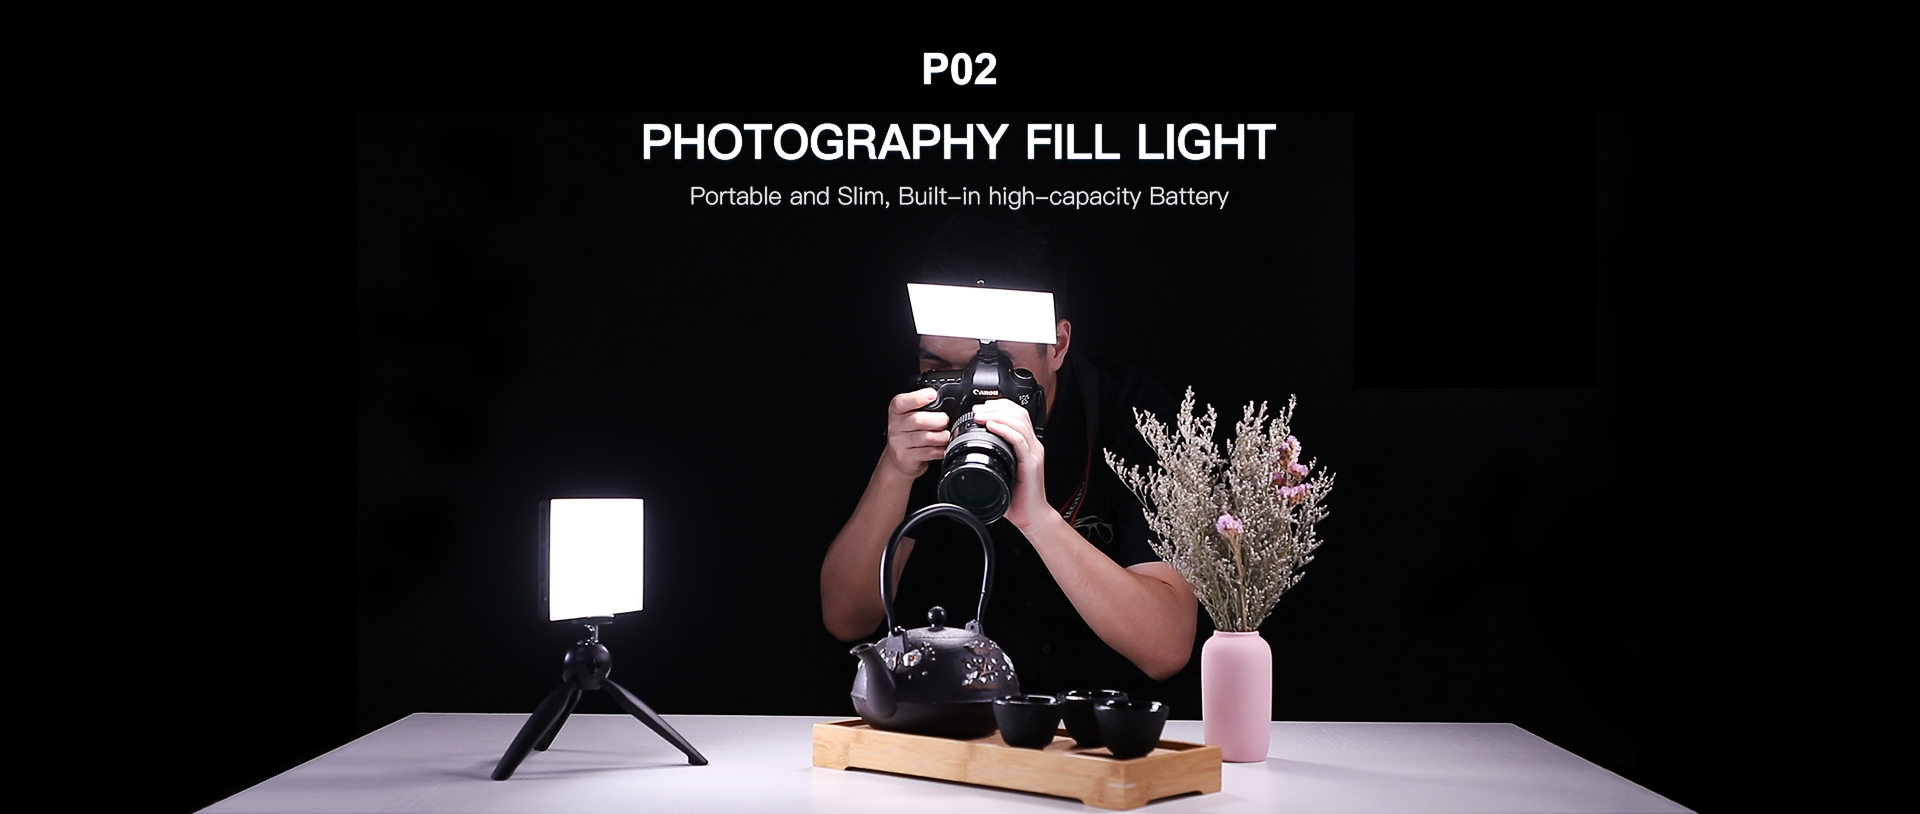 P02 Photography fill light